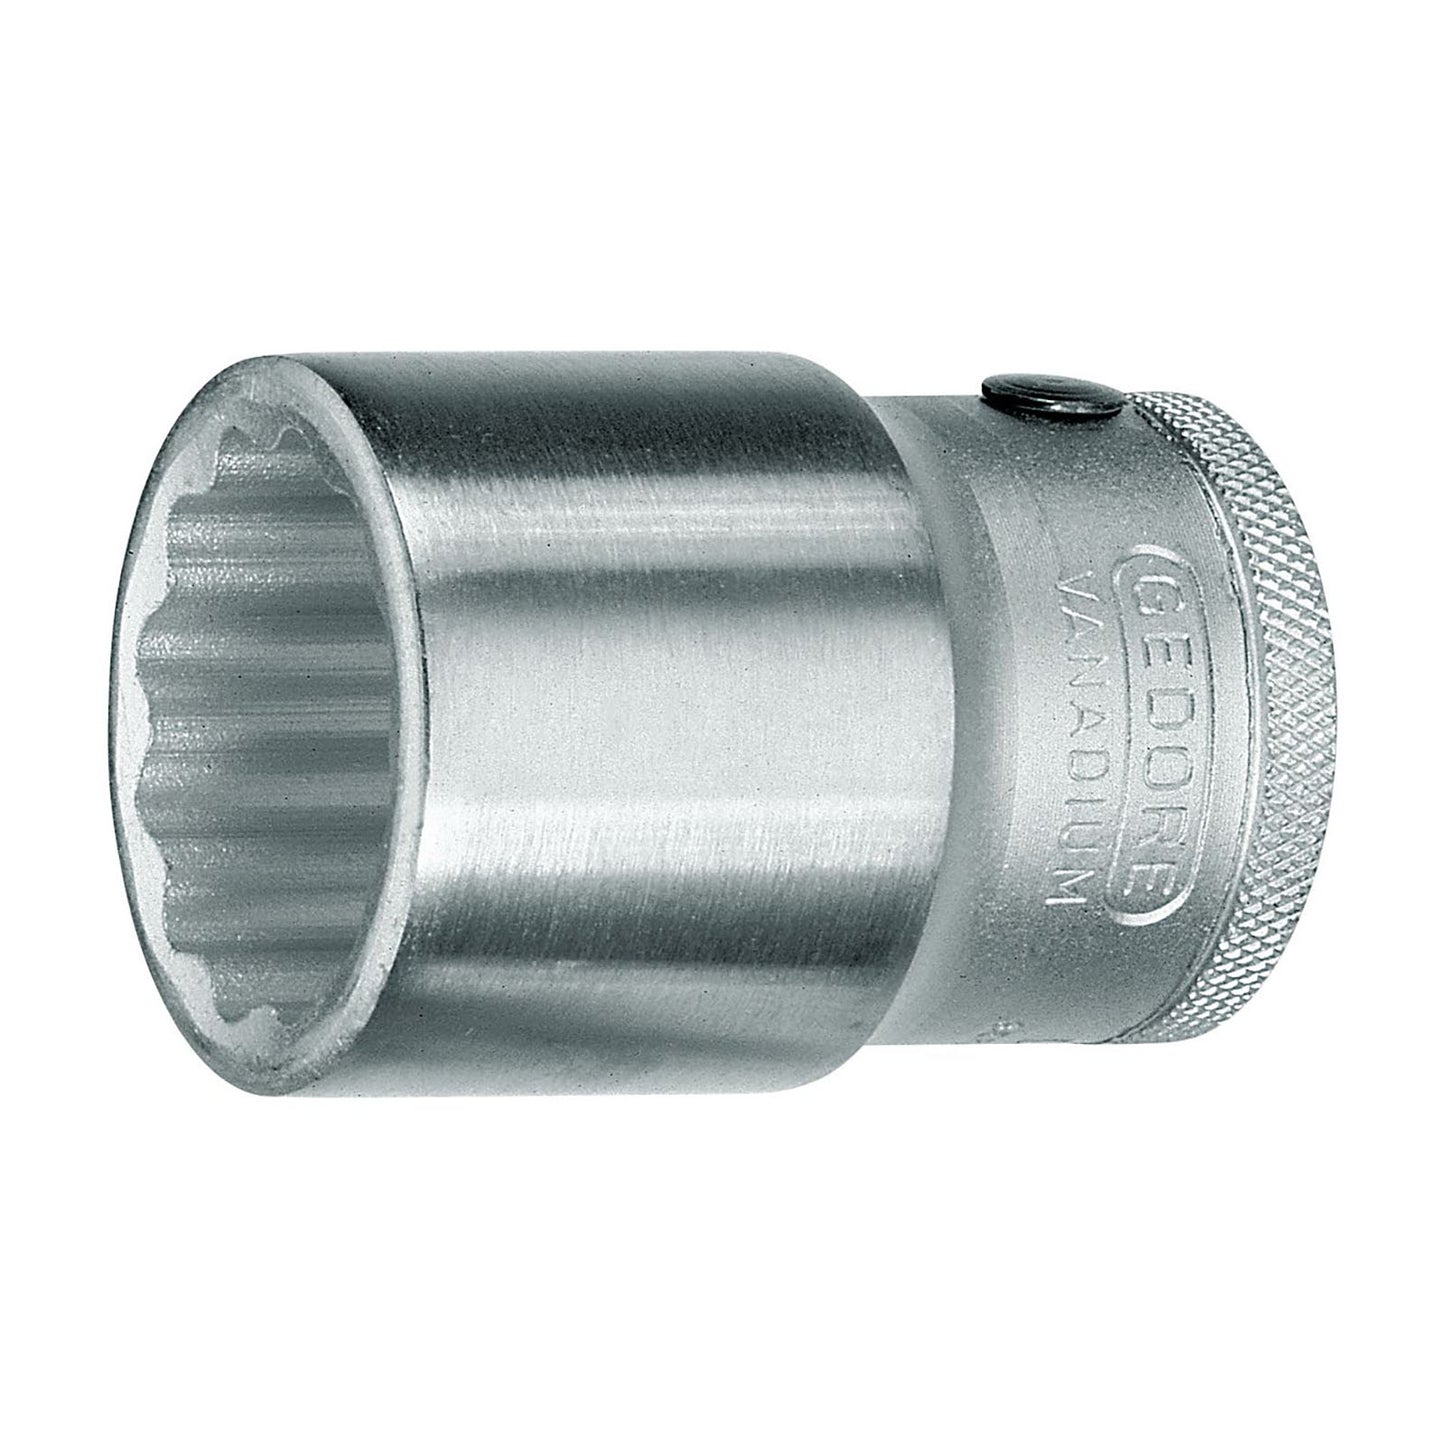 GEDORE D 32 21 - Vaso Unit Drive 3/4", 21 mm (6289800)